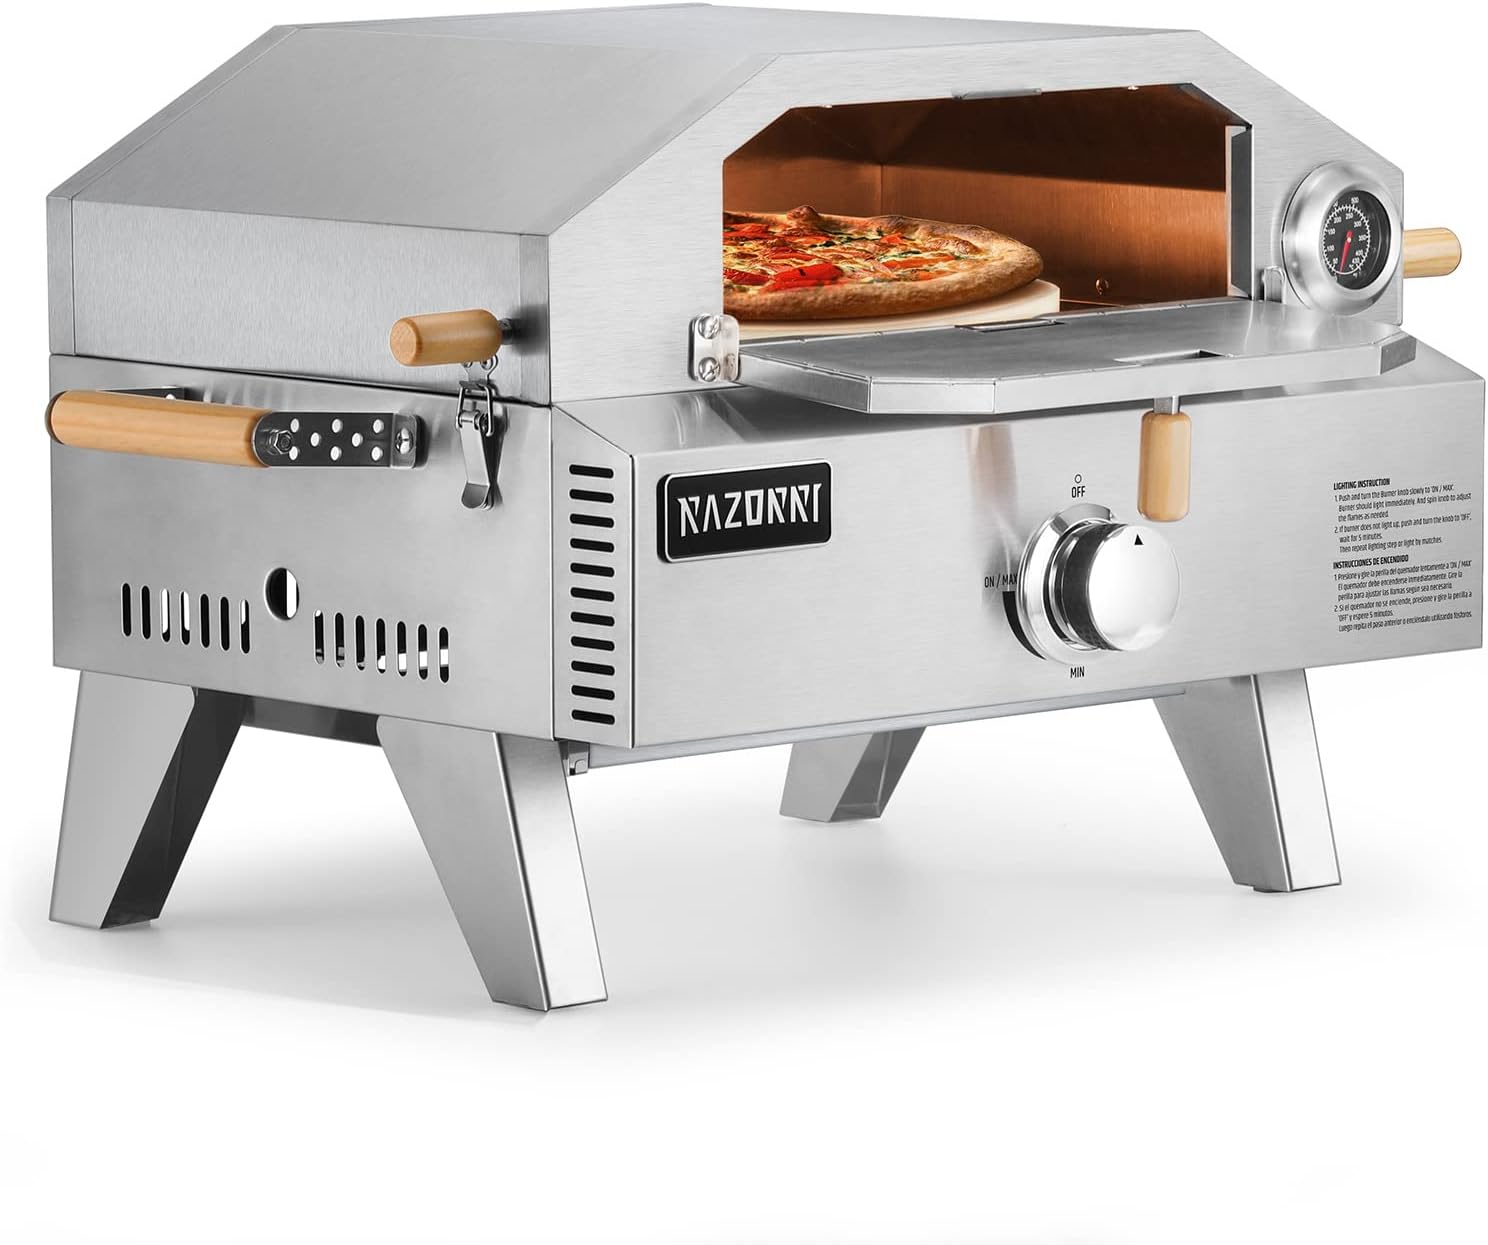 Razorri Comodo Outdoor Gas Pizza Oven & Griller $169.99 + Free Shipping w/ Prime